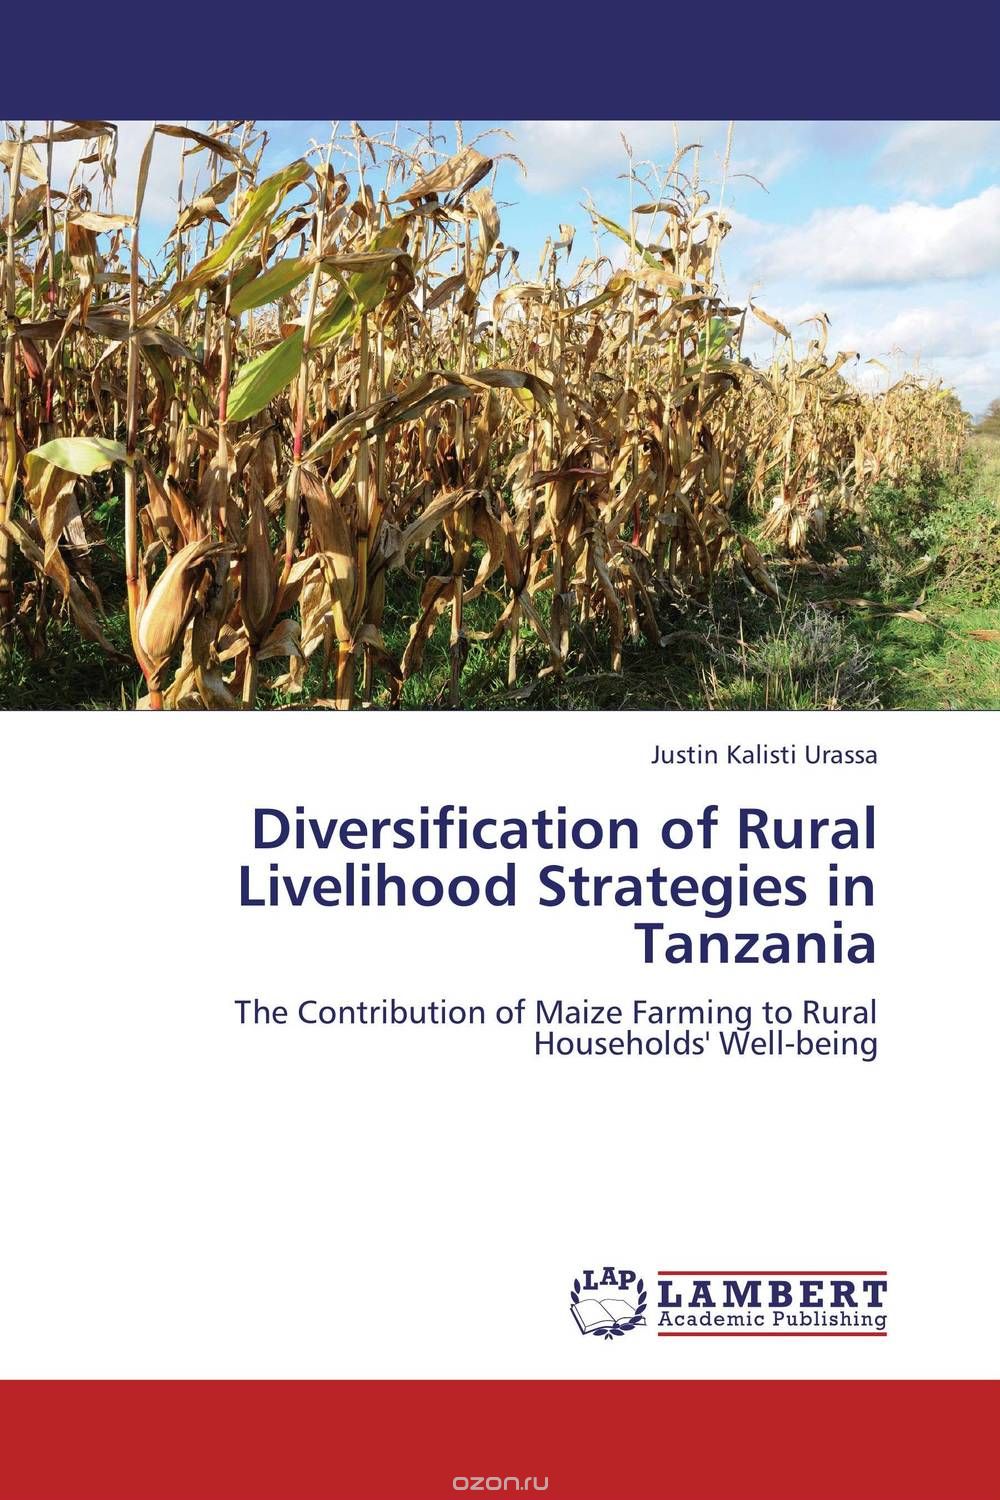 Скачать книгу "Diversification of Rural Livelihood Strategies in Tanzania"